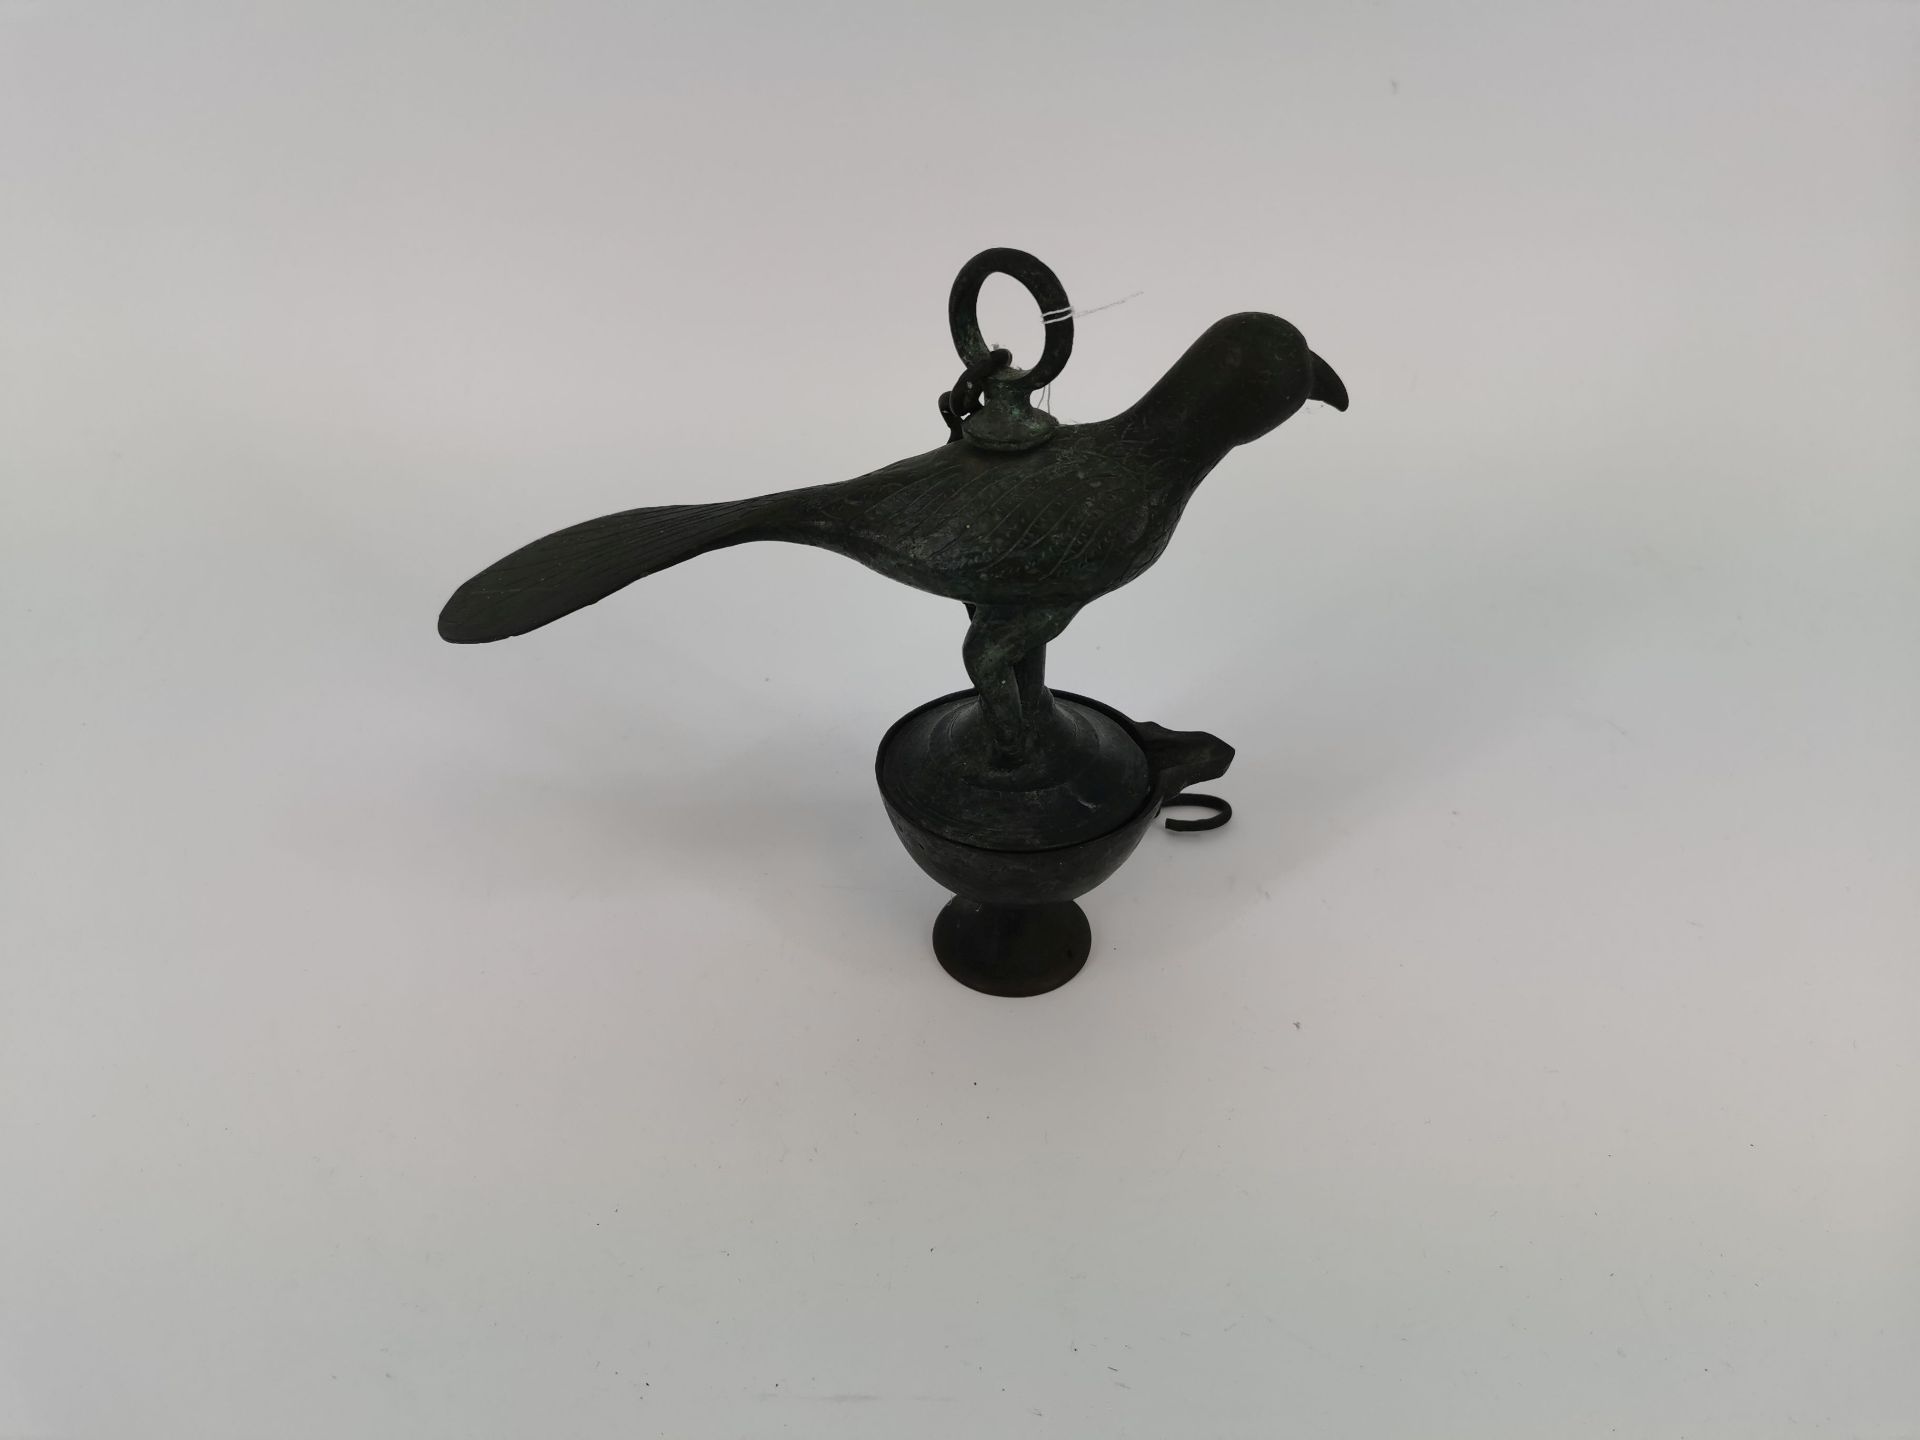 OIL LAMP "BIRD" - Image 3 of 4